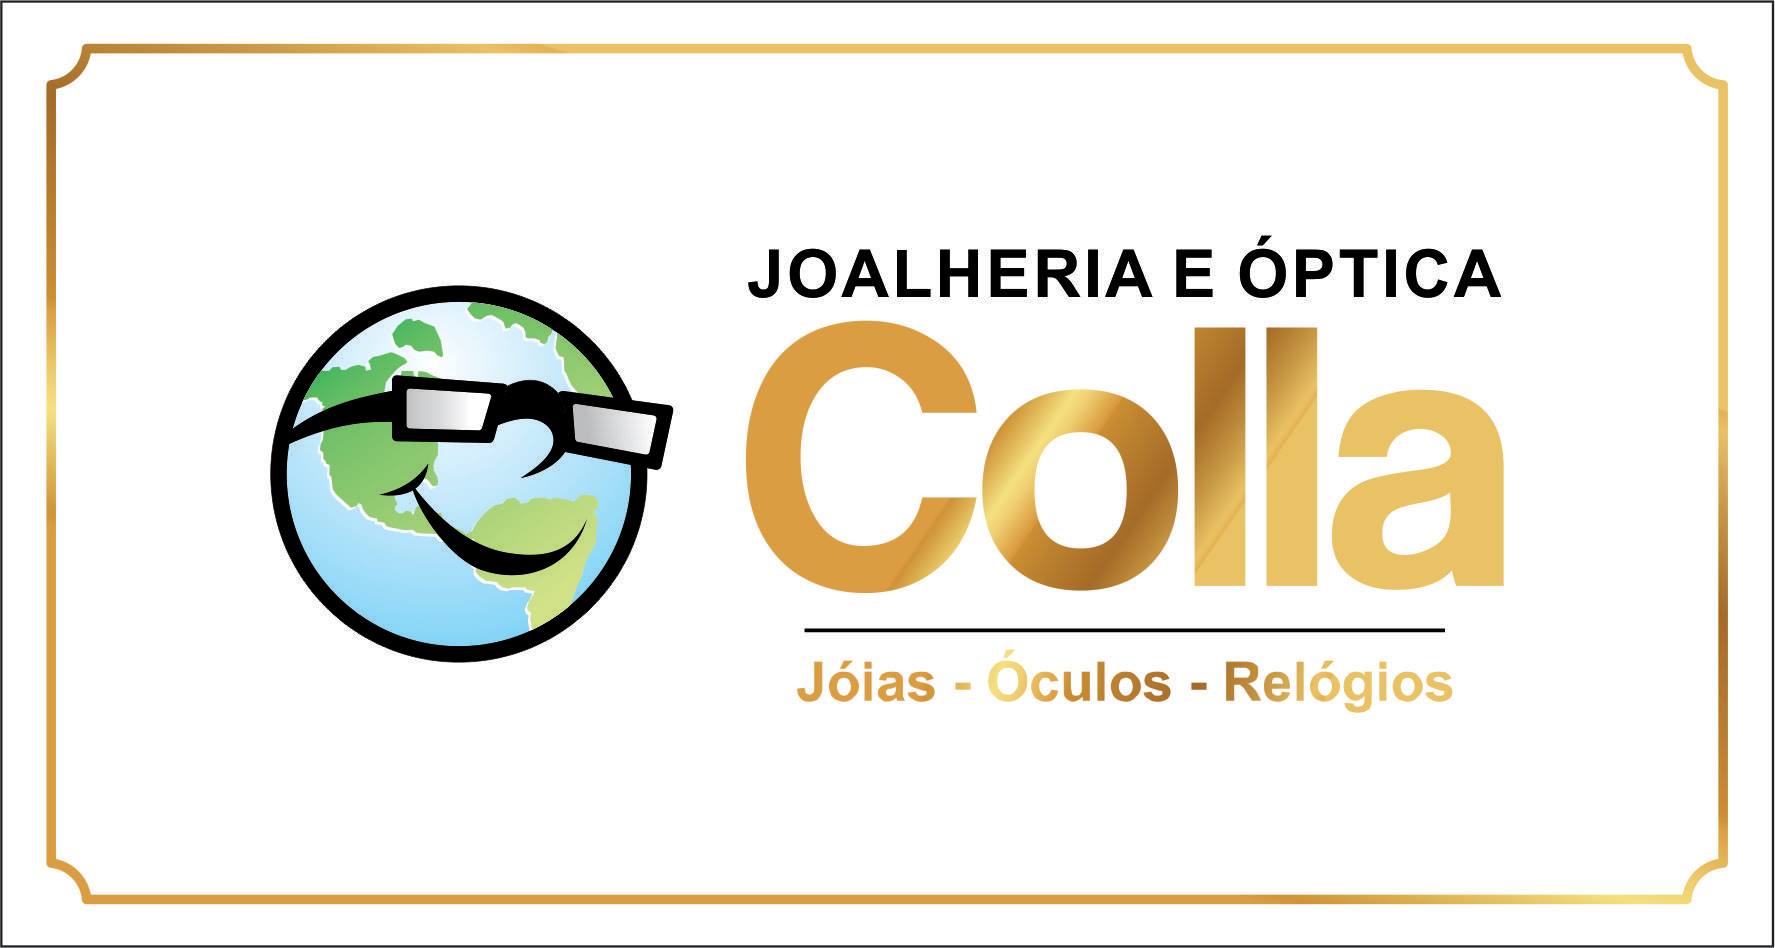 JOALHERIA E ÓPTICA COLLA